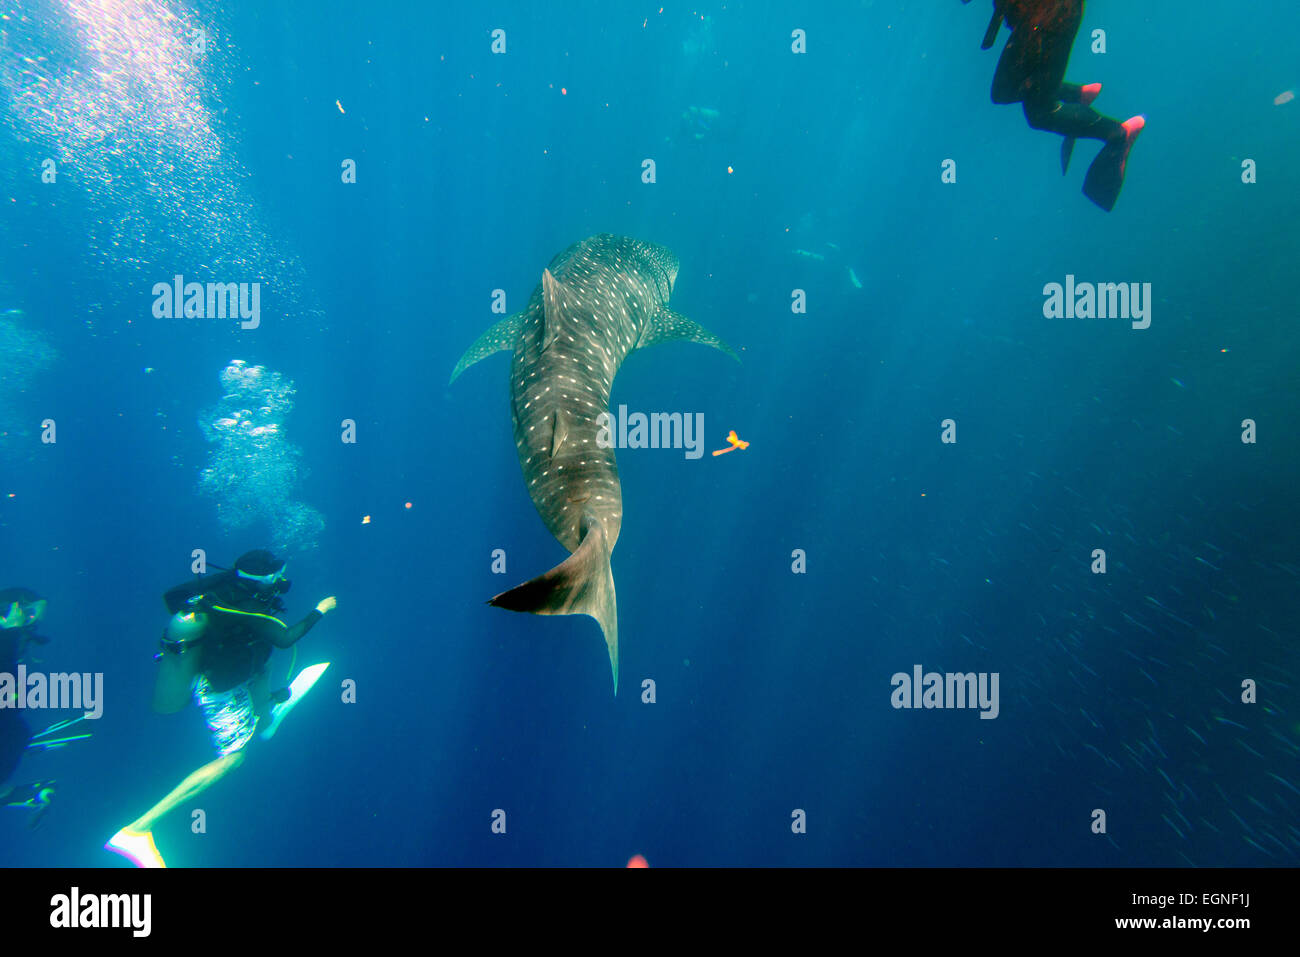 South East Asia, Philippines, The Visayas, Cebu, Moalboal, Panagsama Beach, Whale Shark (Rhincodon typus) and scuba divers Stock Photo